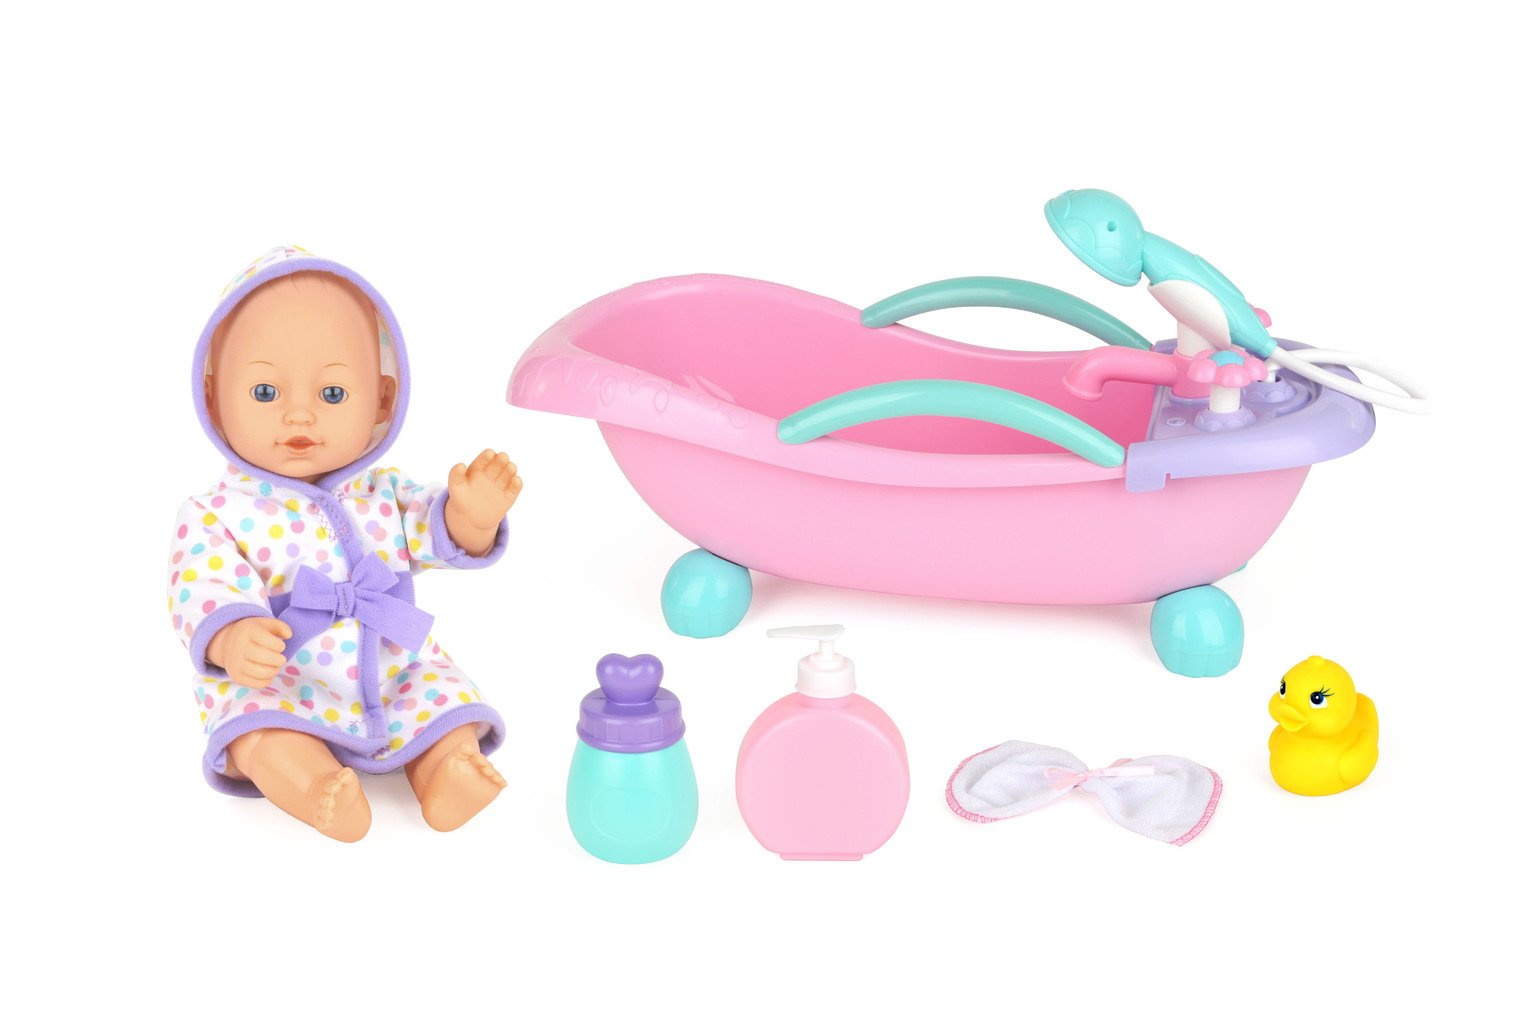 argos toys for babies